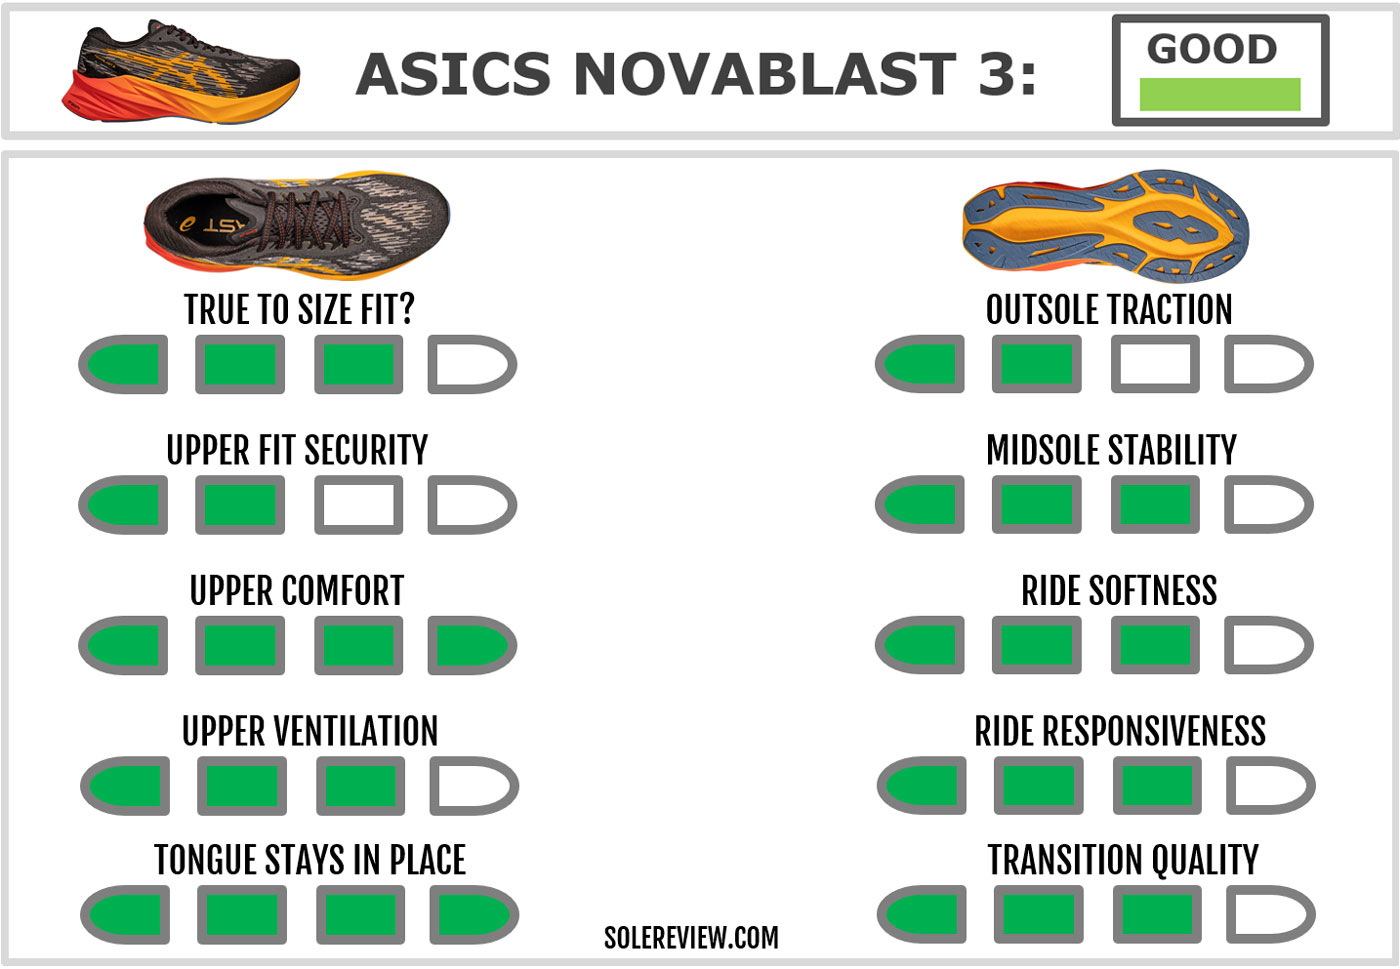 The overall score of the Asics Novablast 3.